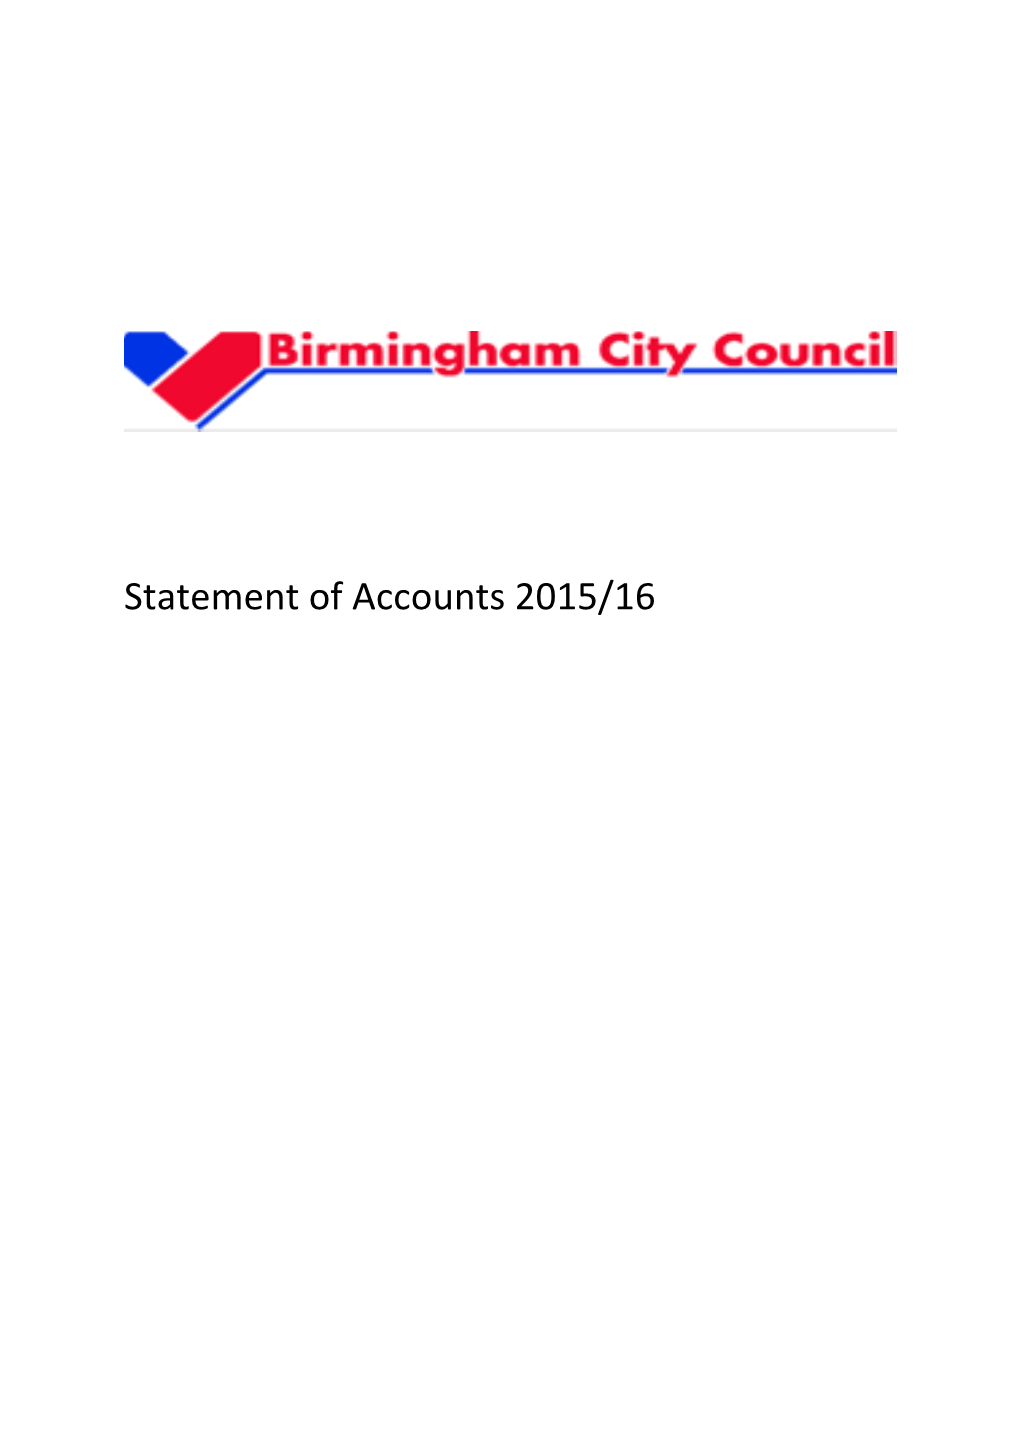 Birmingham City Council Accounts 2015 to 2016